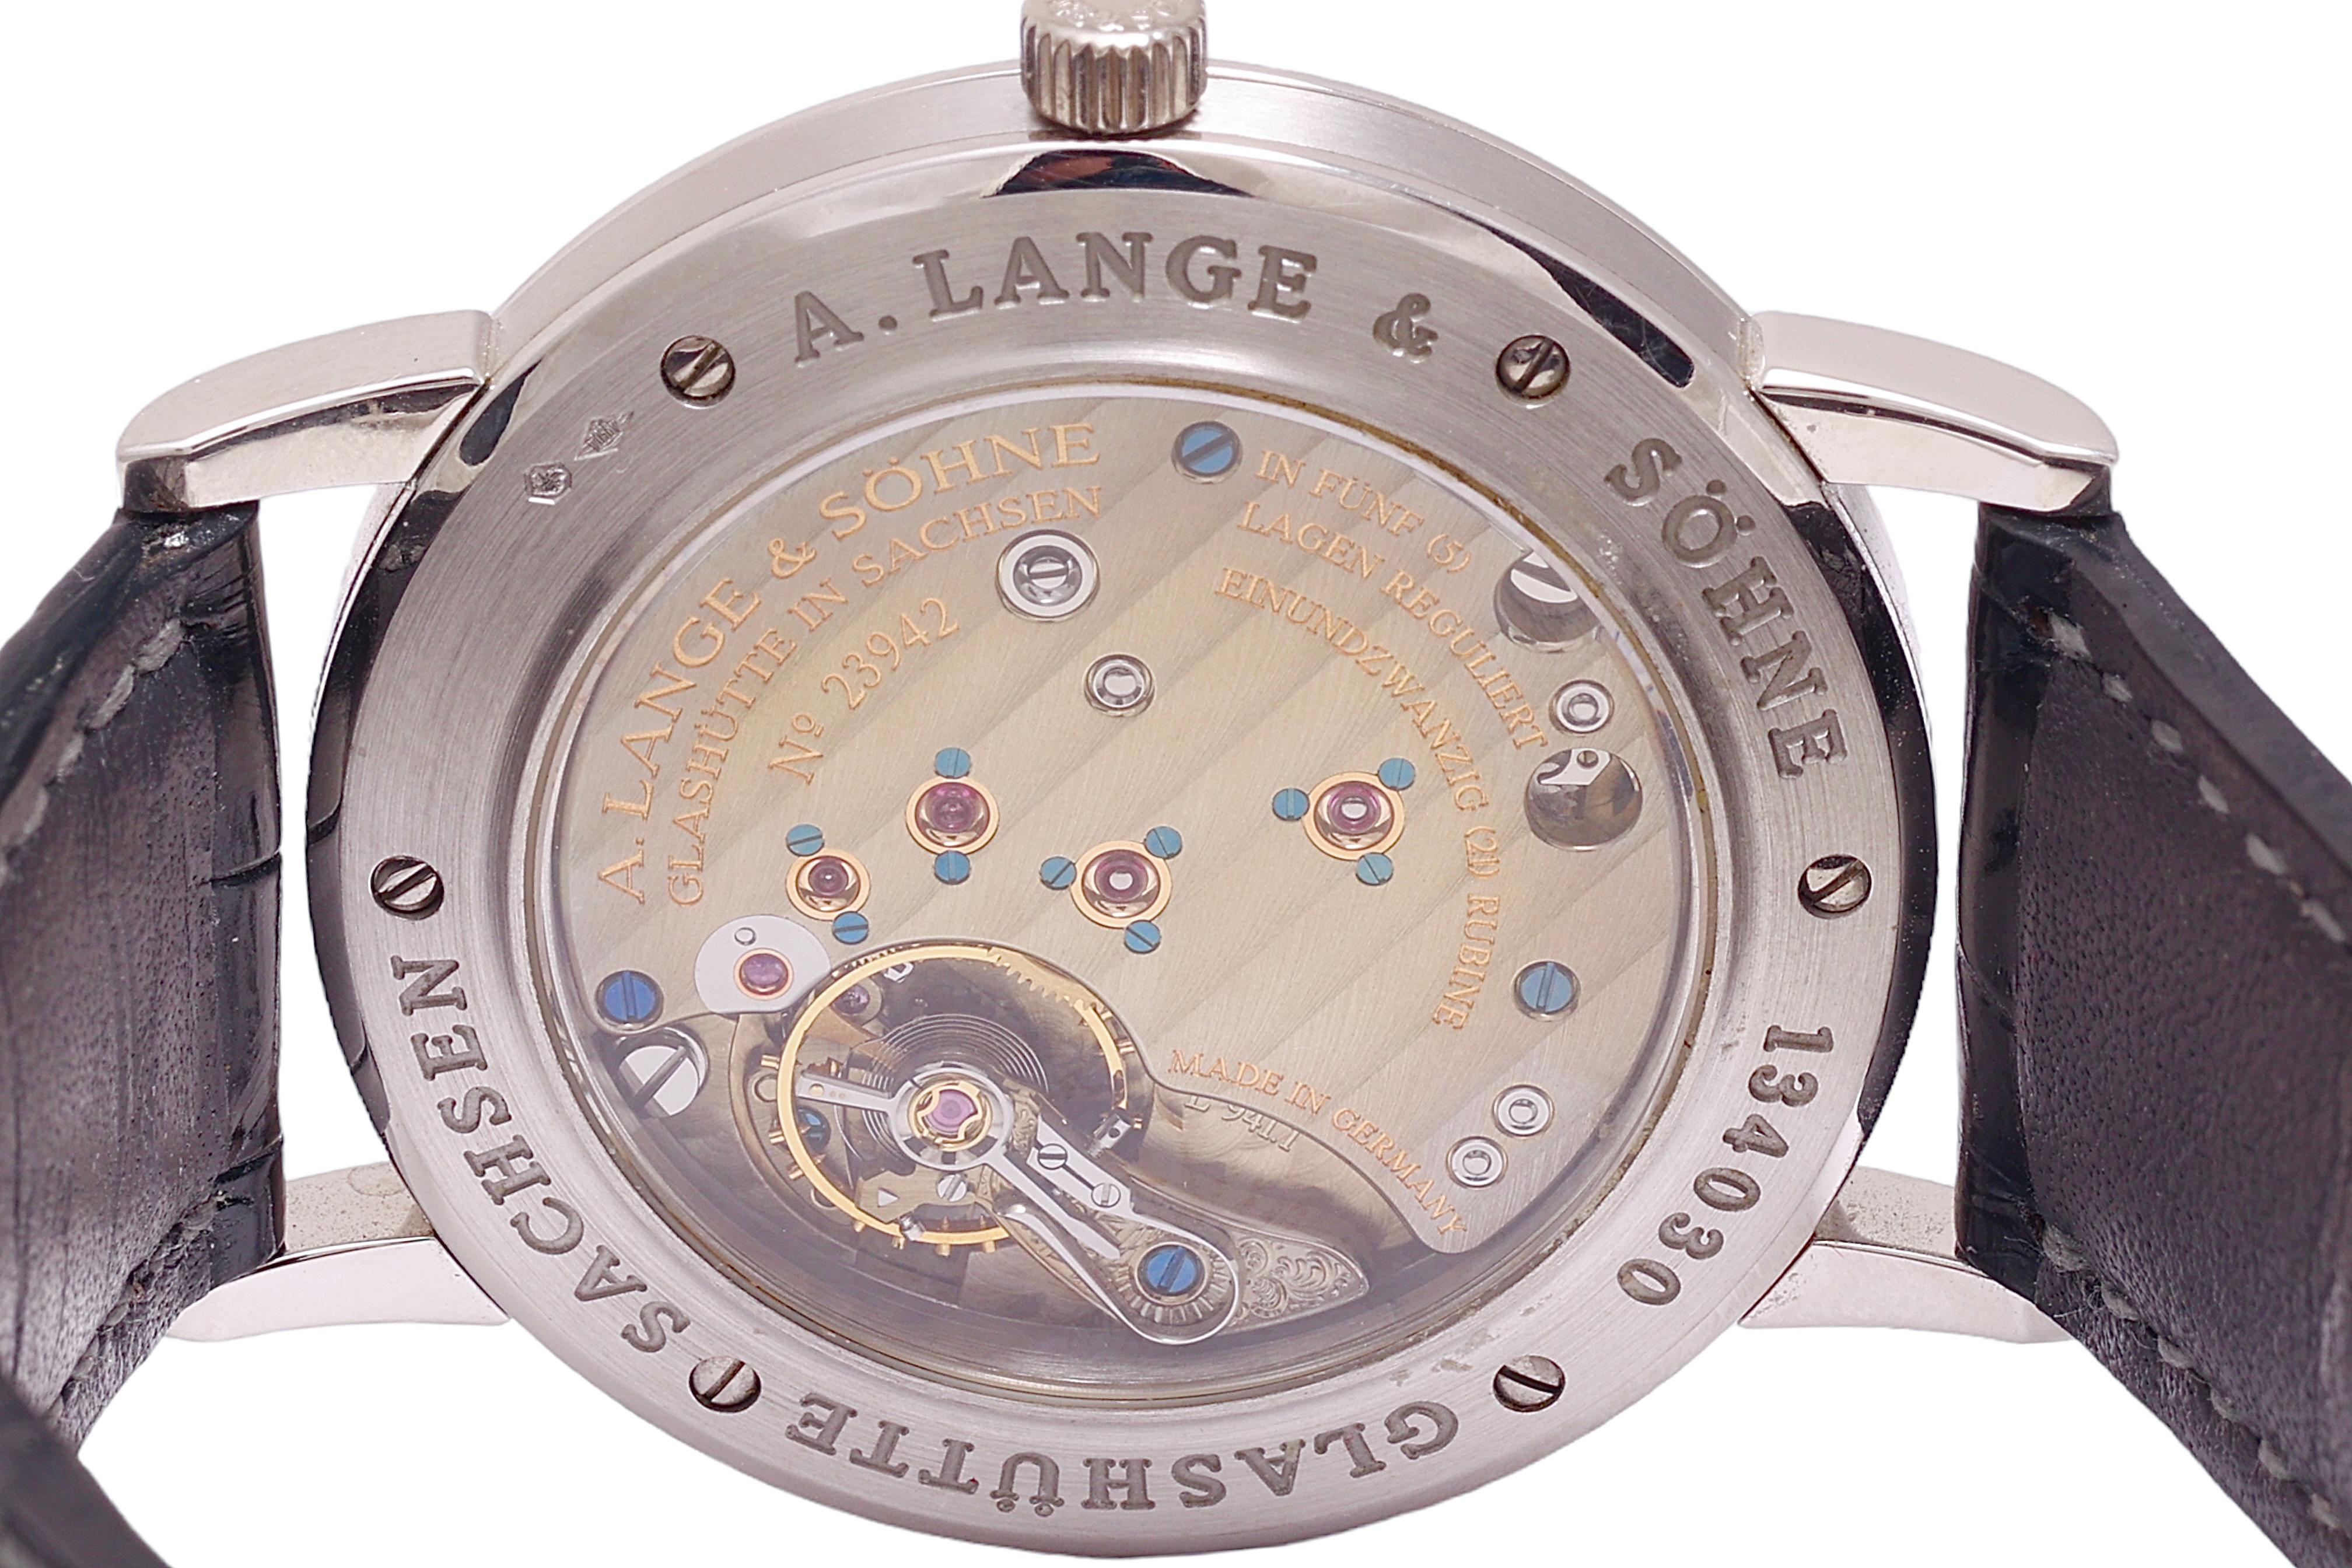 Montre-bracelet Lange Sohne 1815, certificat Lange comme neuf Réf. 206.025 en vente 8